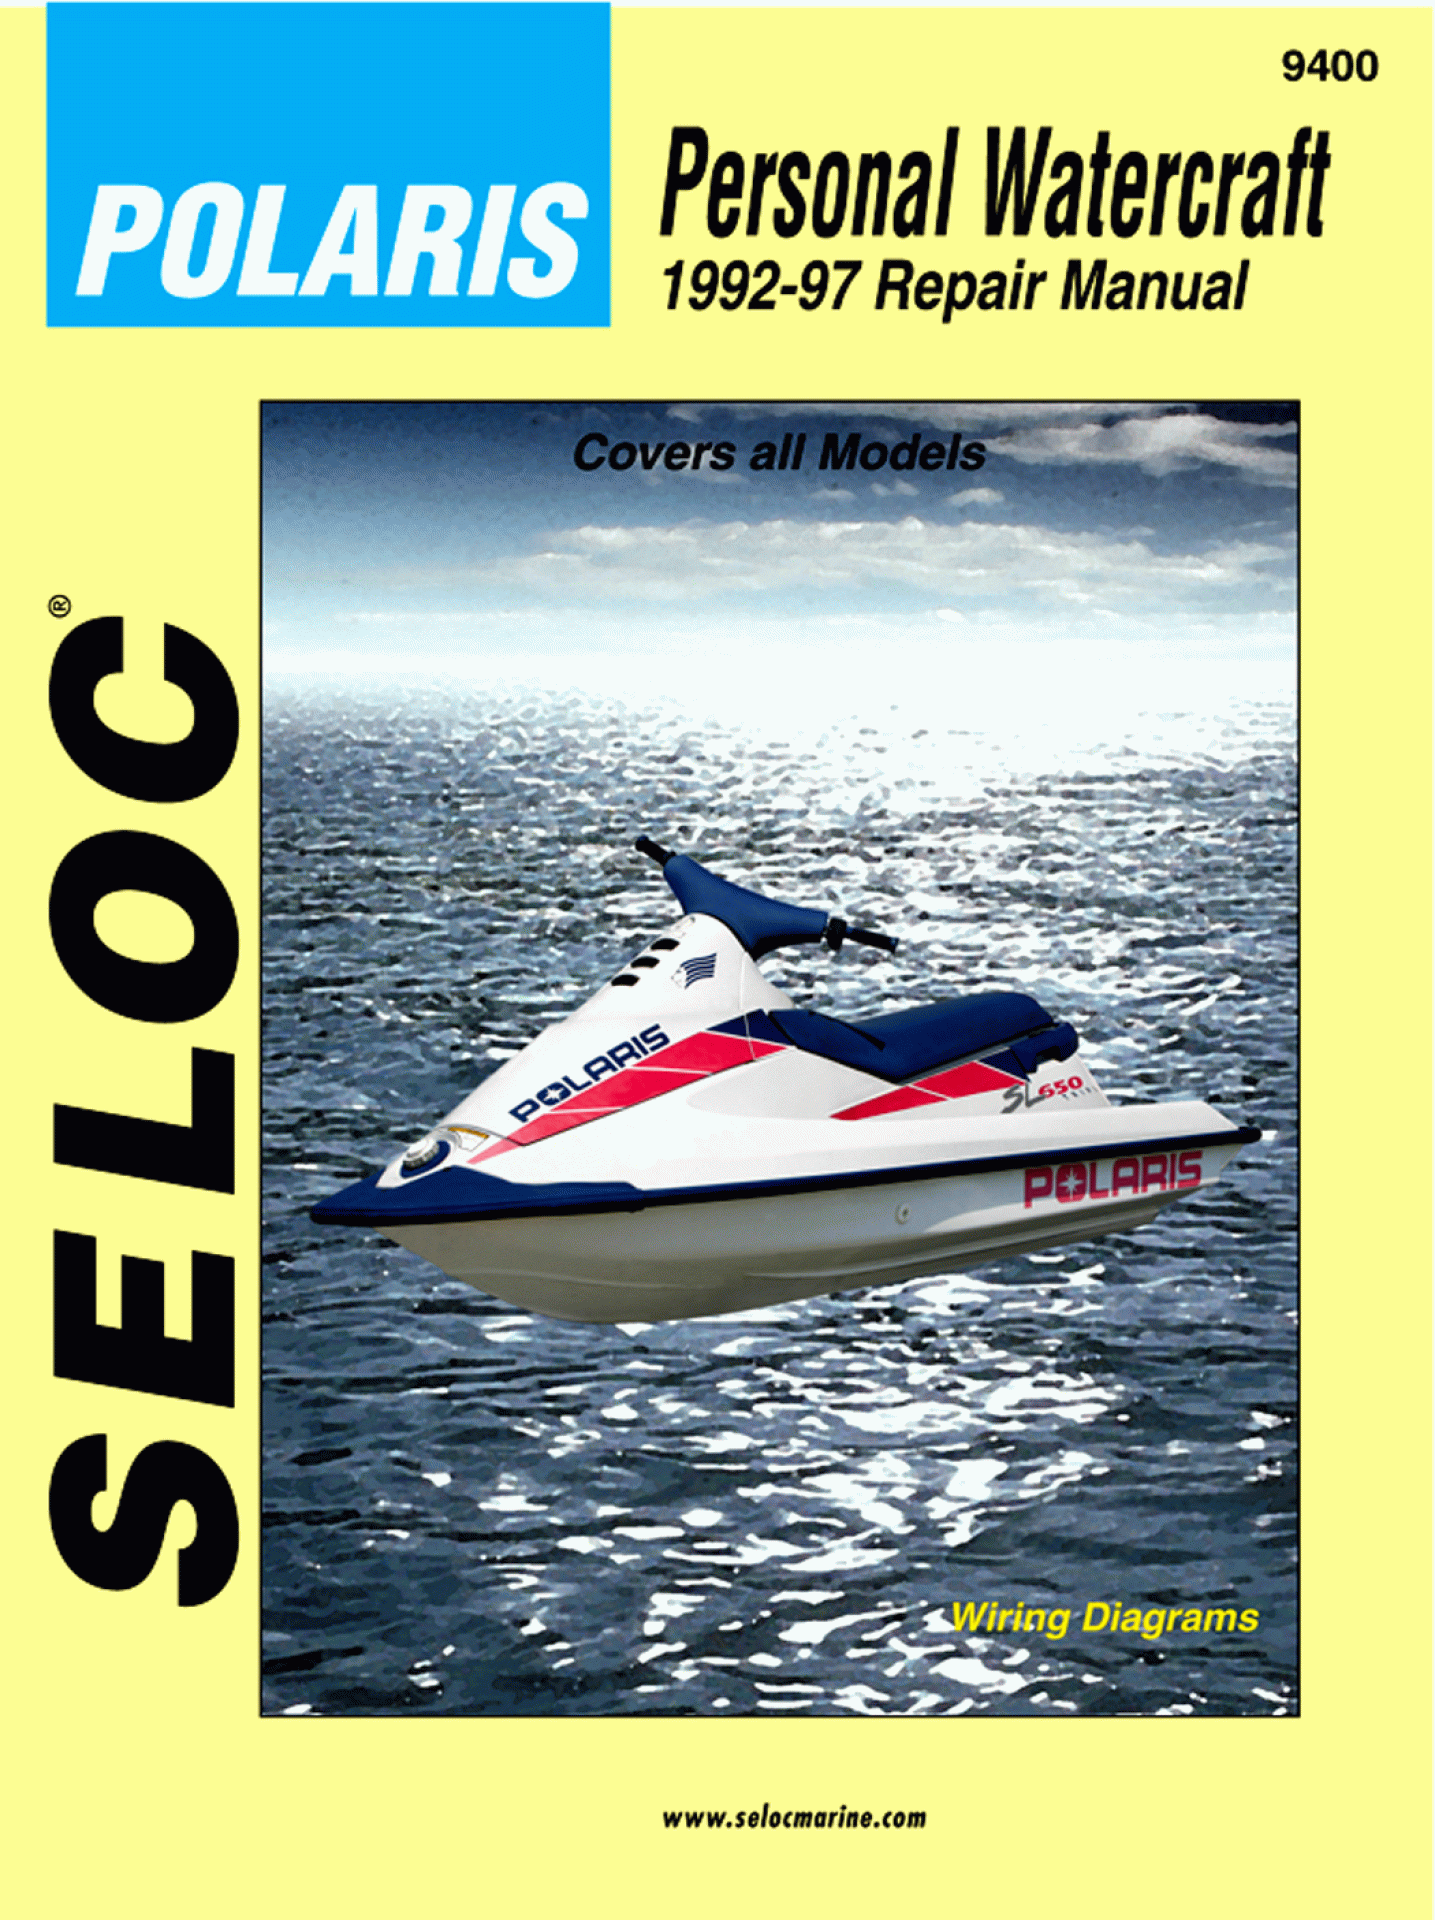 SELOC PUBLISHING | 18-09400 | REPAIR MANUAL Polaris Personal Watercraft 1992-97